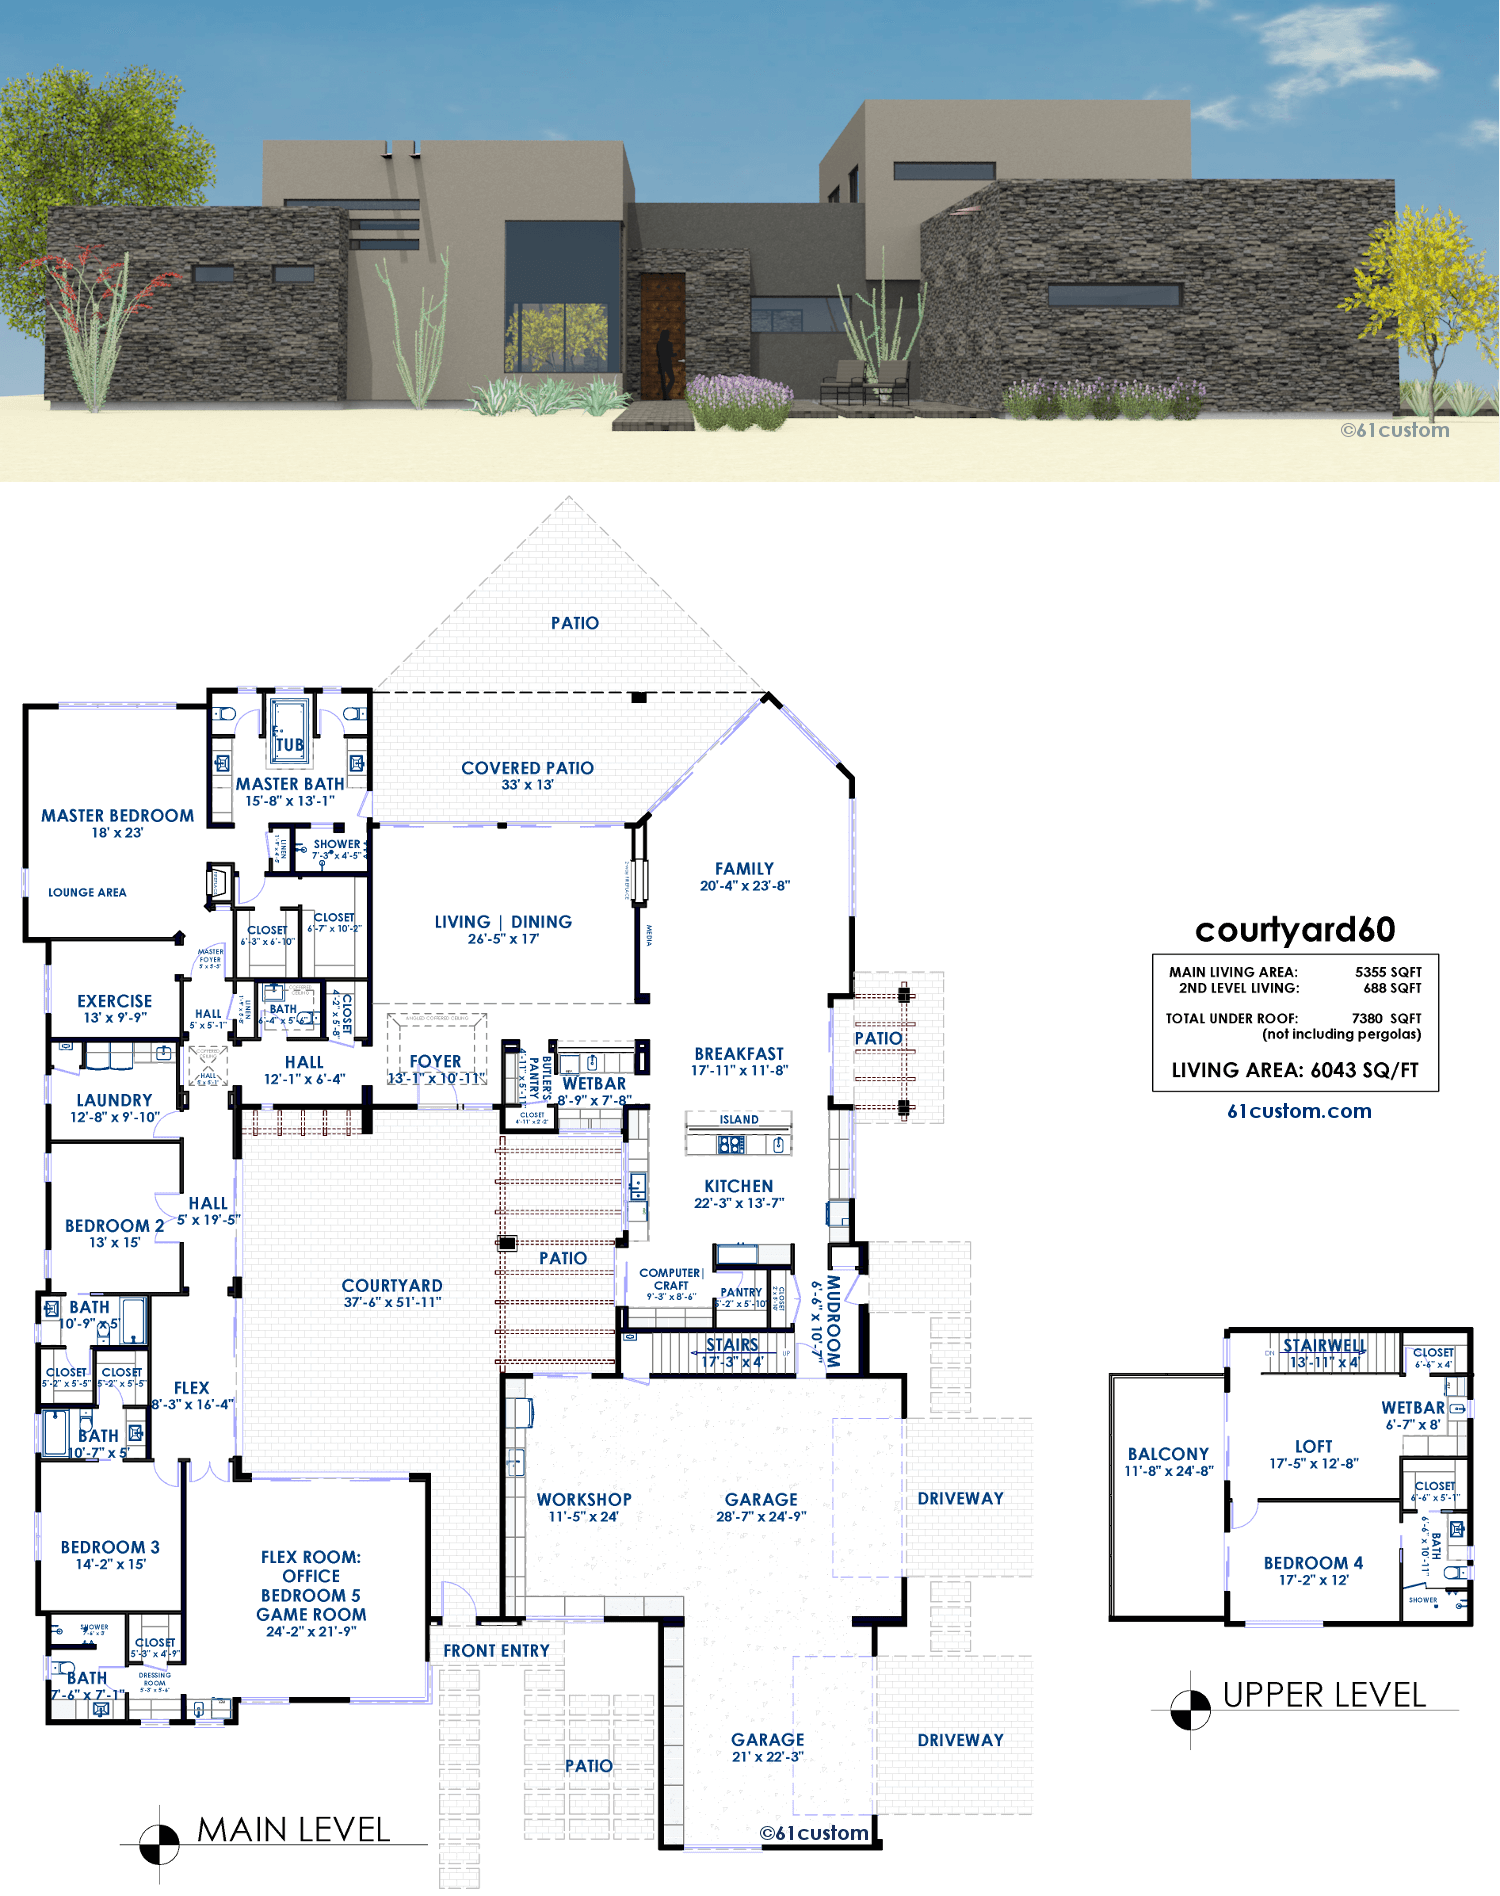 courtyard60 Luxury Modern House Plan | 61custom | Contemporary & Modern